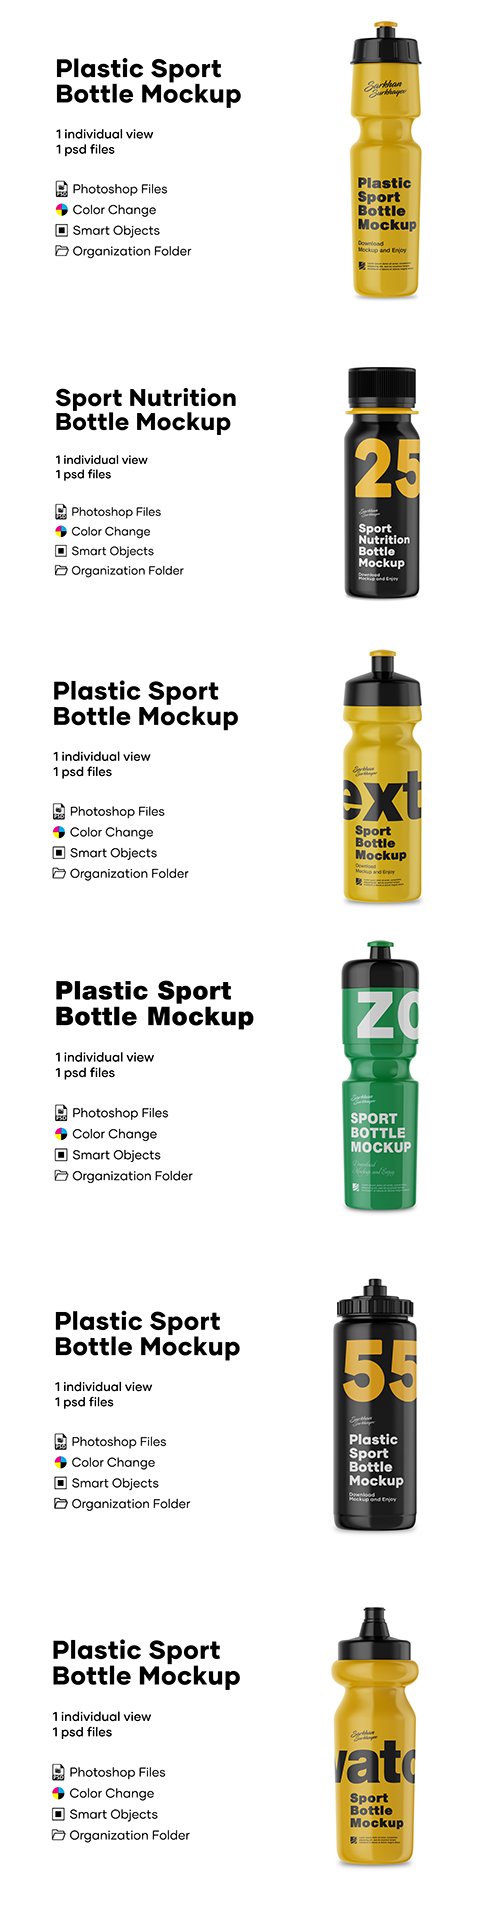 Plastic sports bottle Mockup